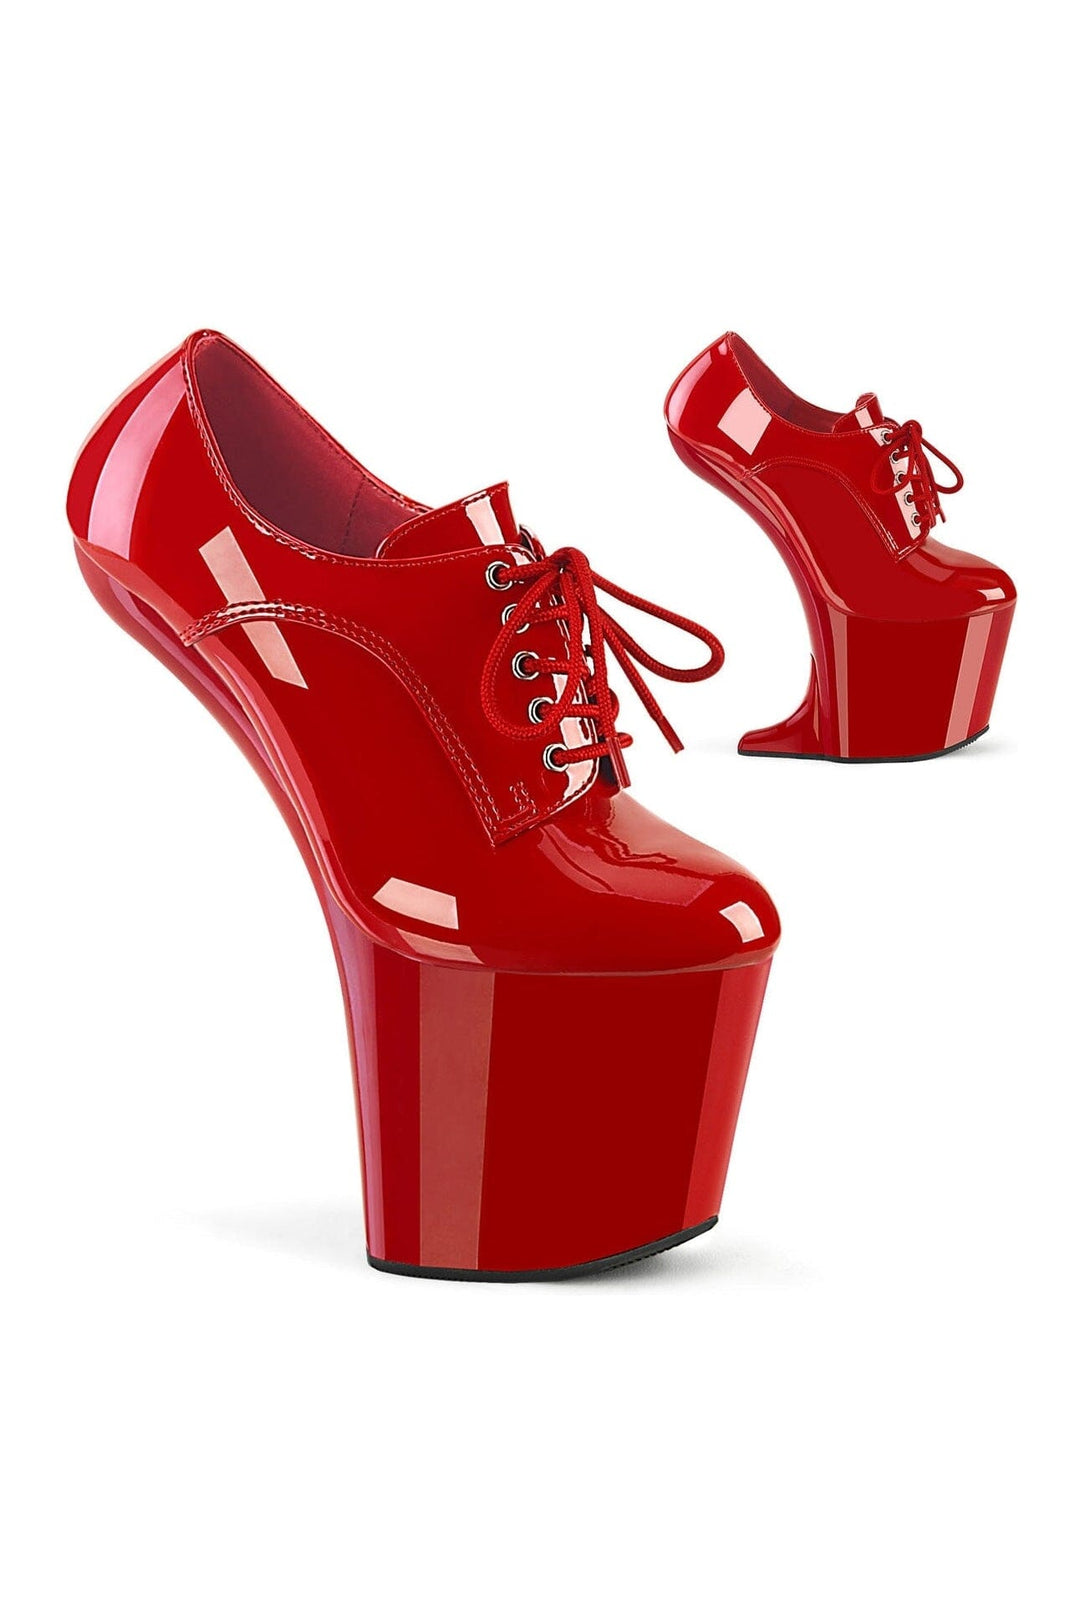 CRAZE-860 Red Patent Pump-Pumps- Stripper Shoes at SEXYSHOES.COM